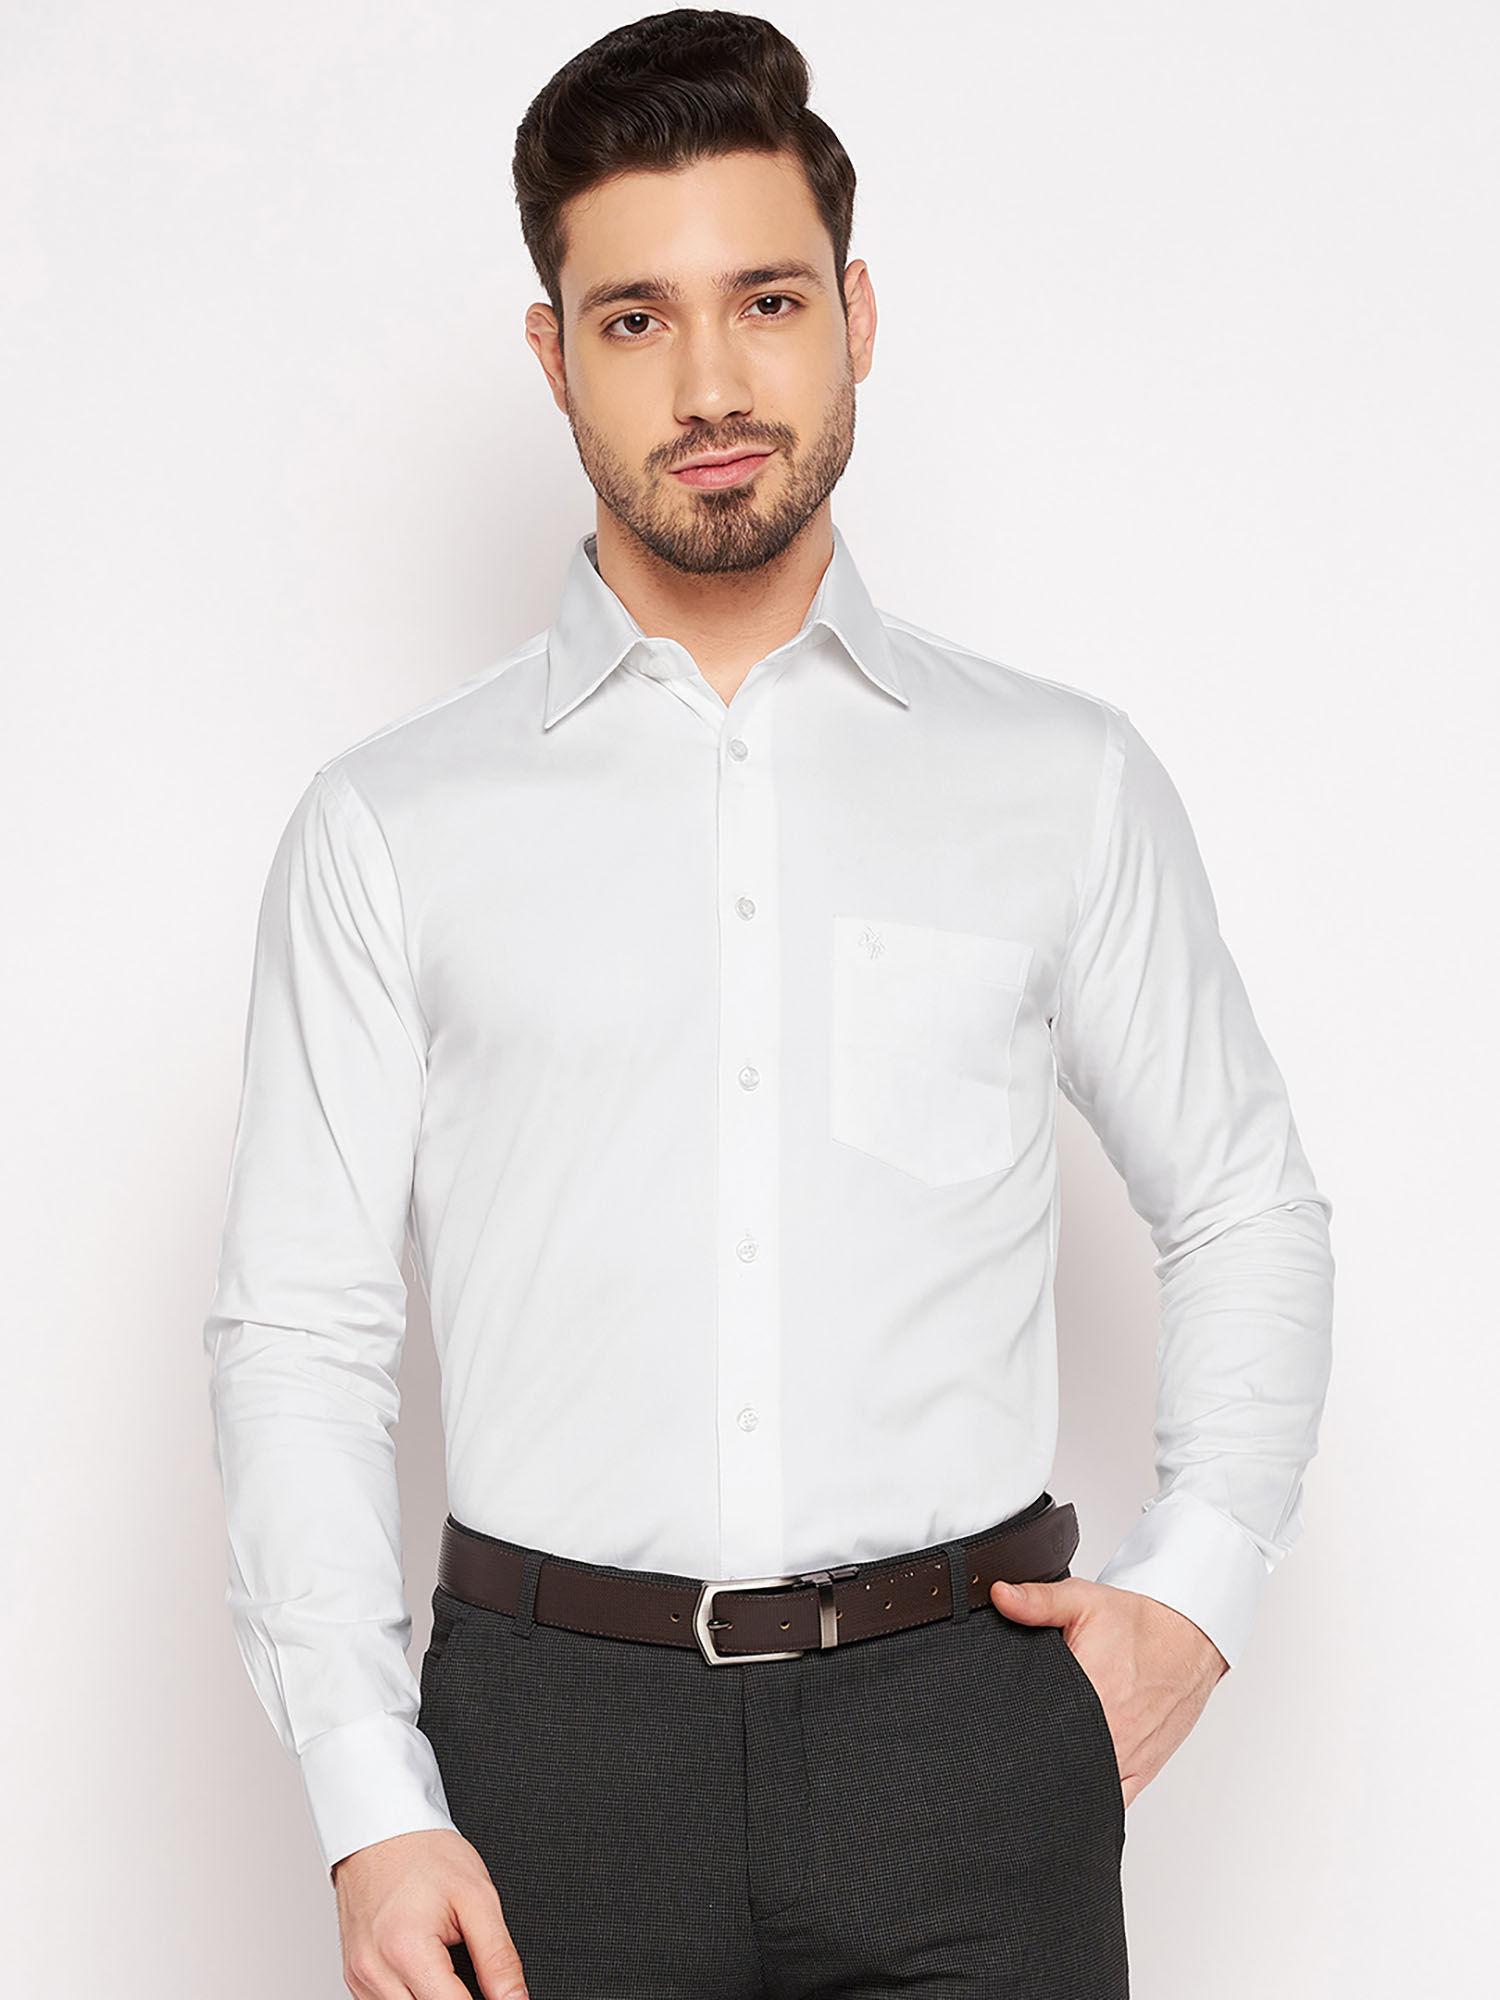 mens solid white formal shirt